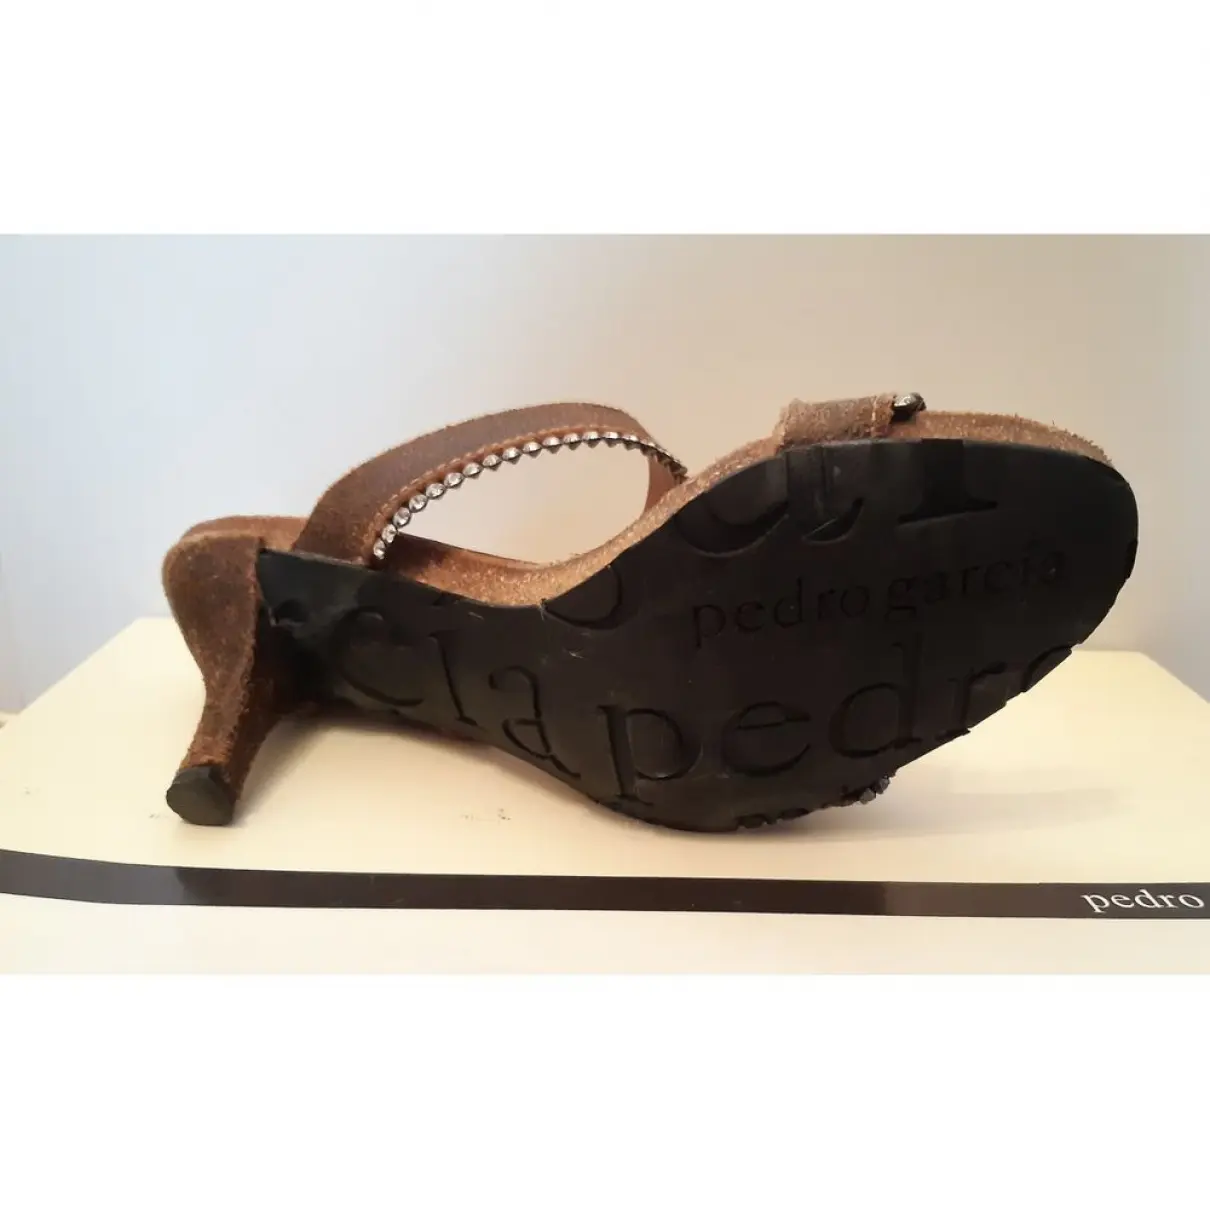 Leather sandals Pedro Garcia